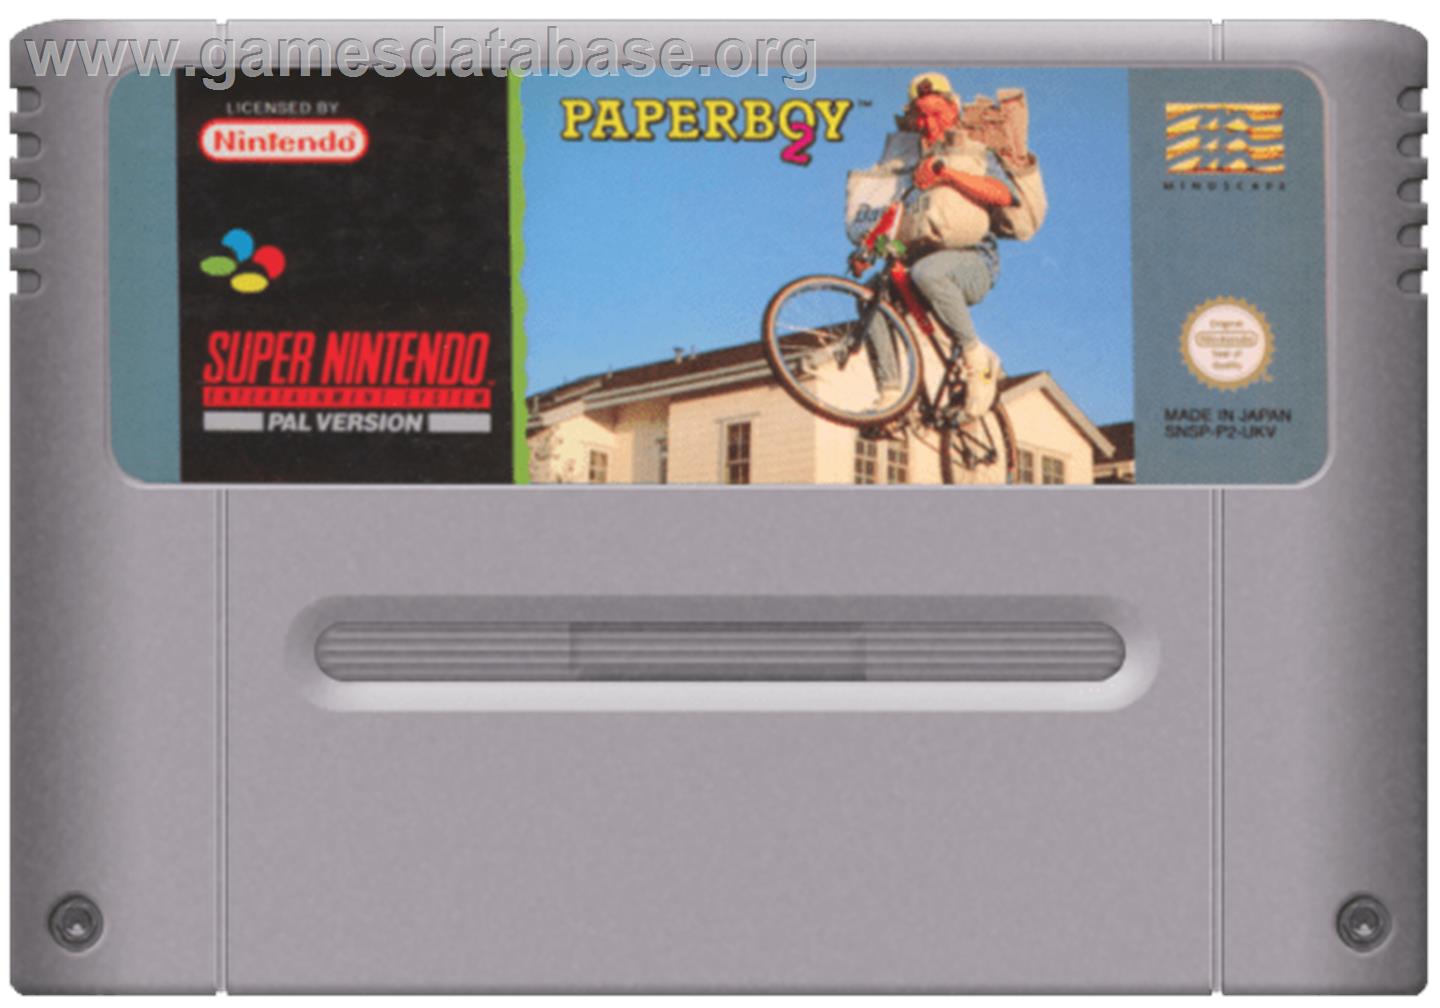 Paperboy 2 - Nintendo SNES - Artwork - Cartridge